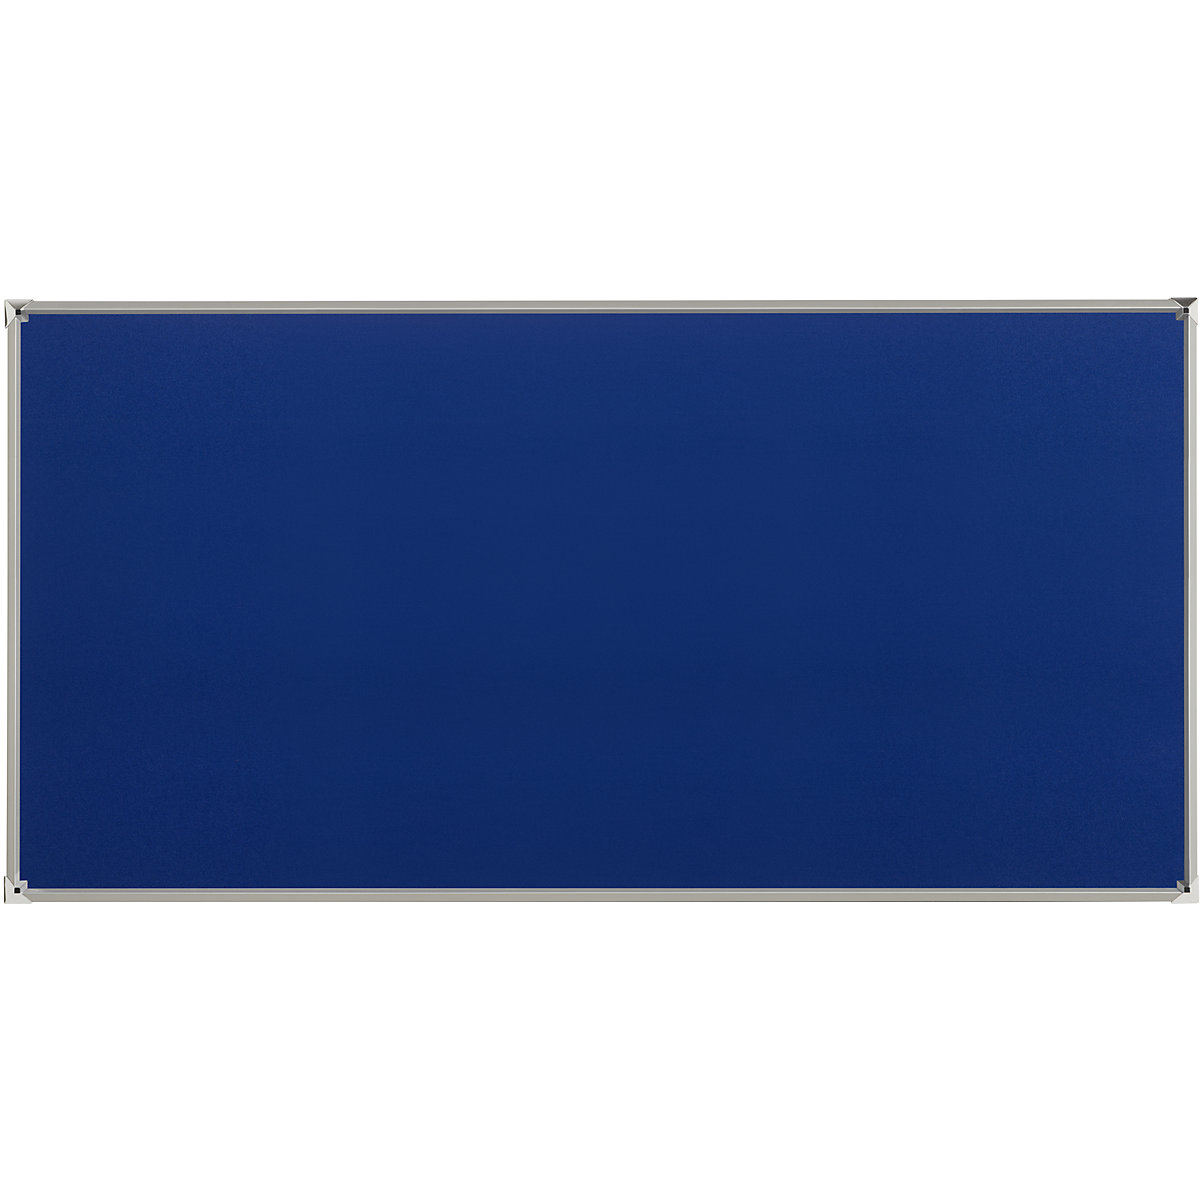 EUROKRAFTpro Pinnwand mit Alu-Rahmen, Stoffbezug, blau, BxH 2000 x 1000 mm